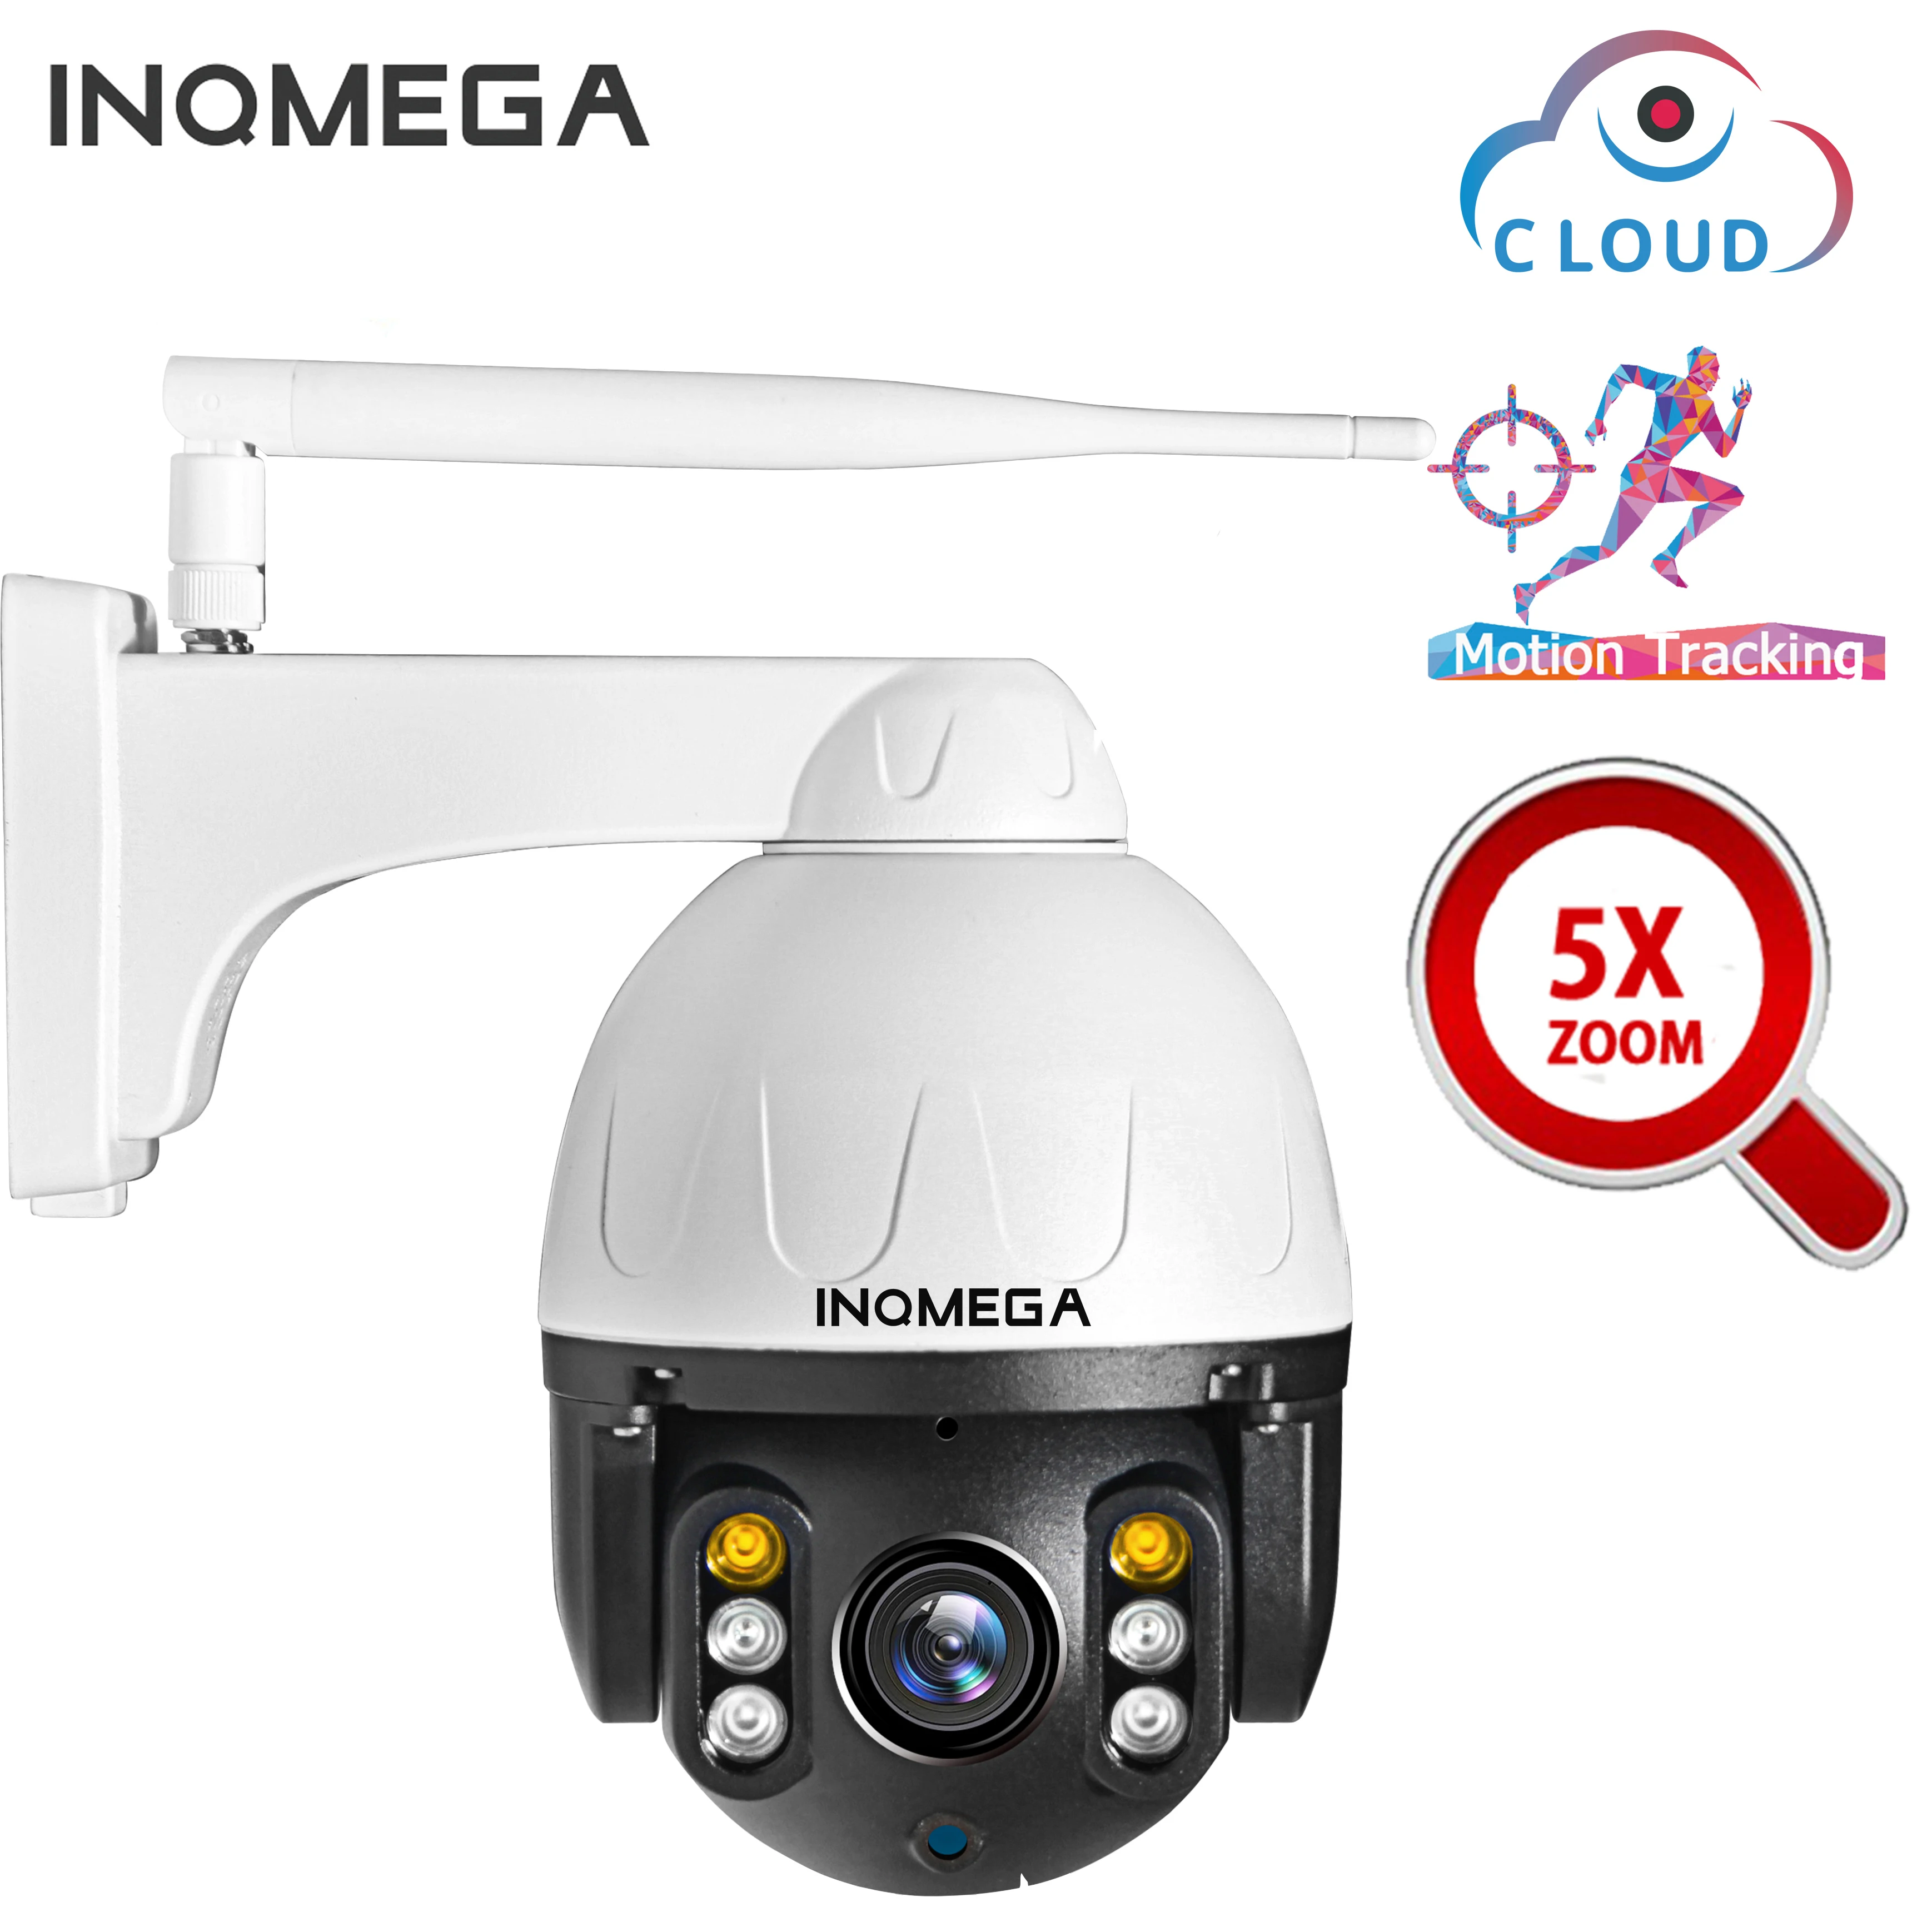 

INQMEGA Cloud 1080P Auto Tracking Camera 5X optical zoom Outdoor PTZ IP Camera WIFI Speed Dome 2MP Onvif IR CCTV Security Cam